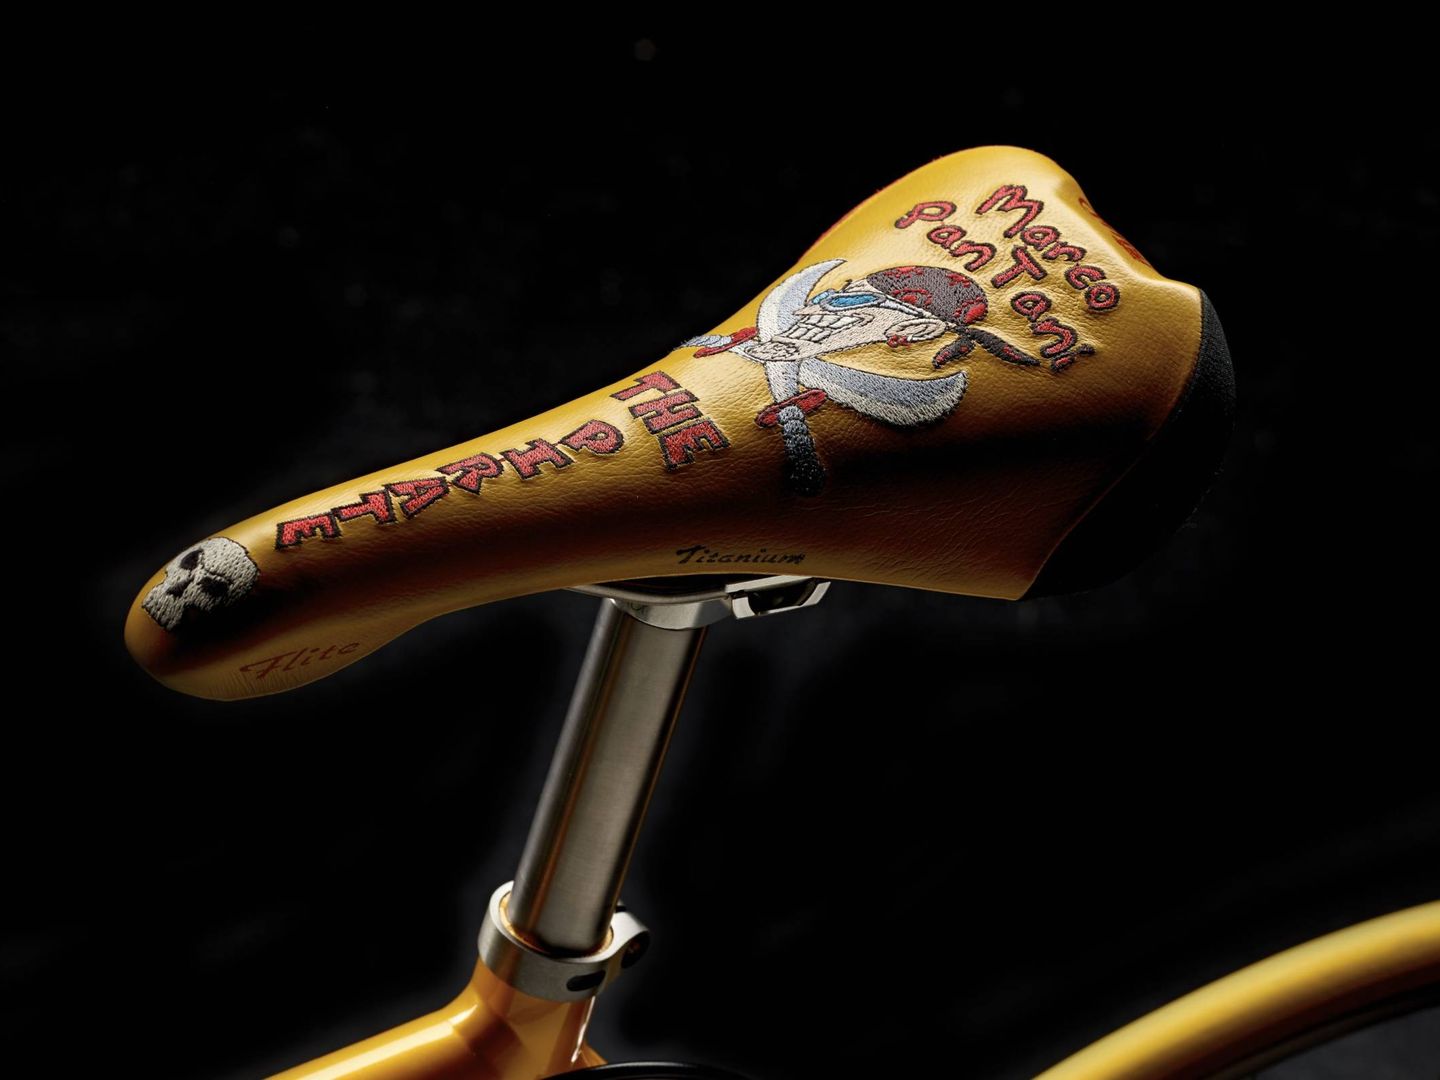 Una bici de Marco Pantani restaurada por Nicola Brunelli. (Foto: Old Bici)